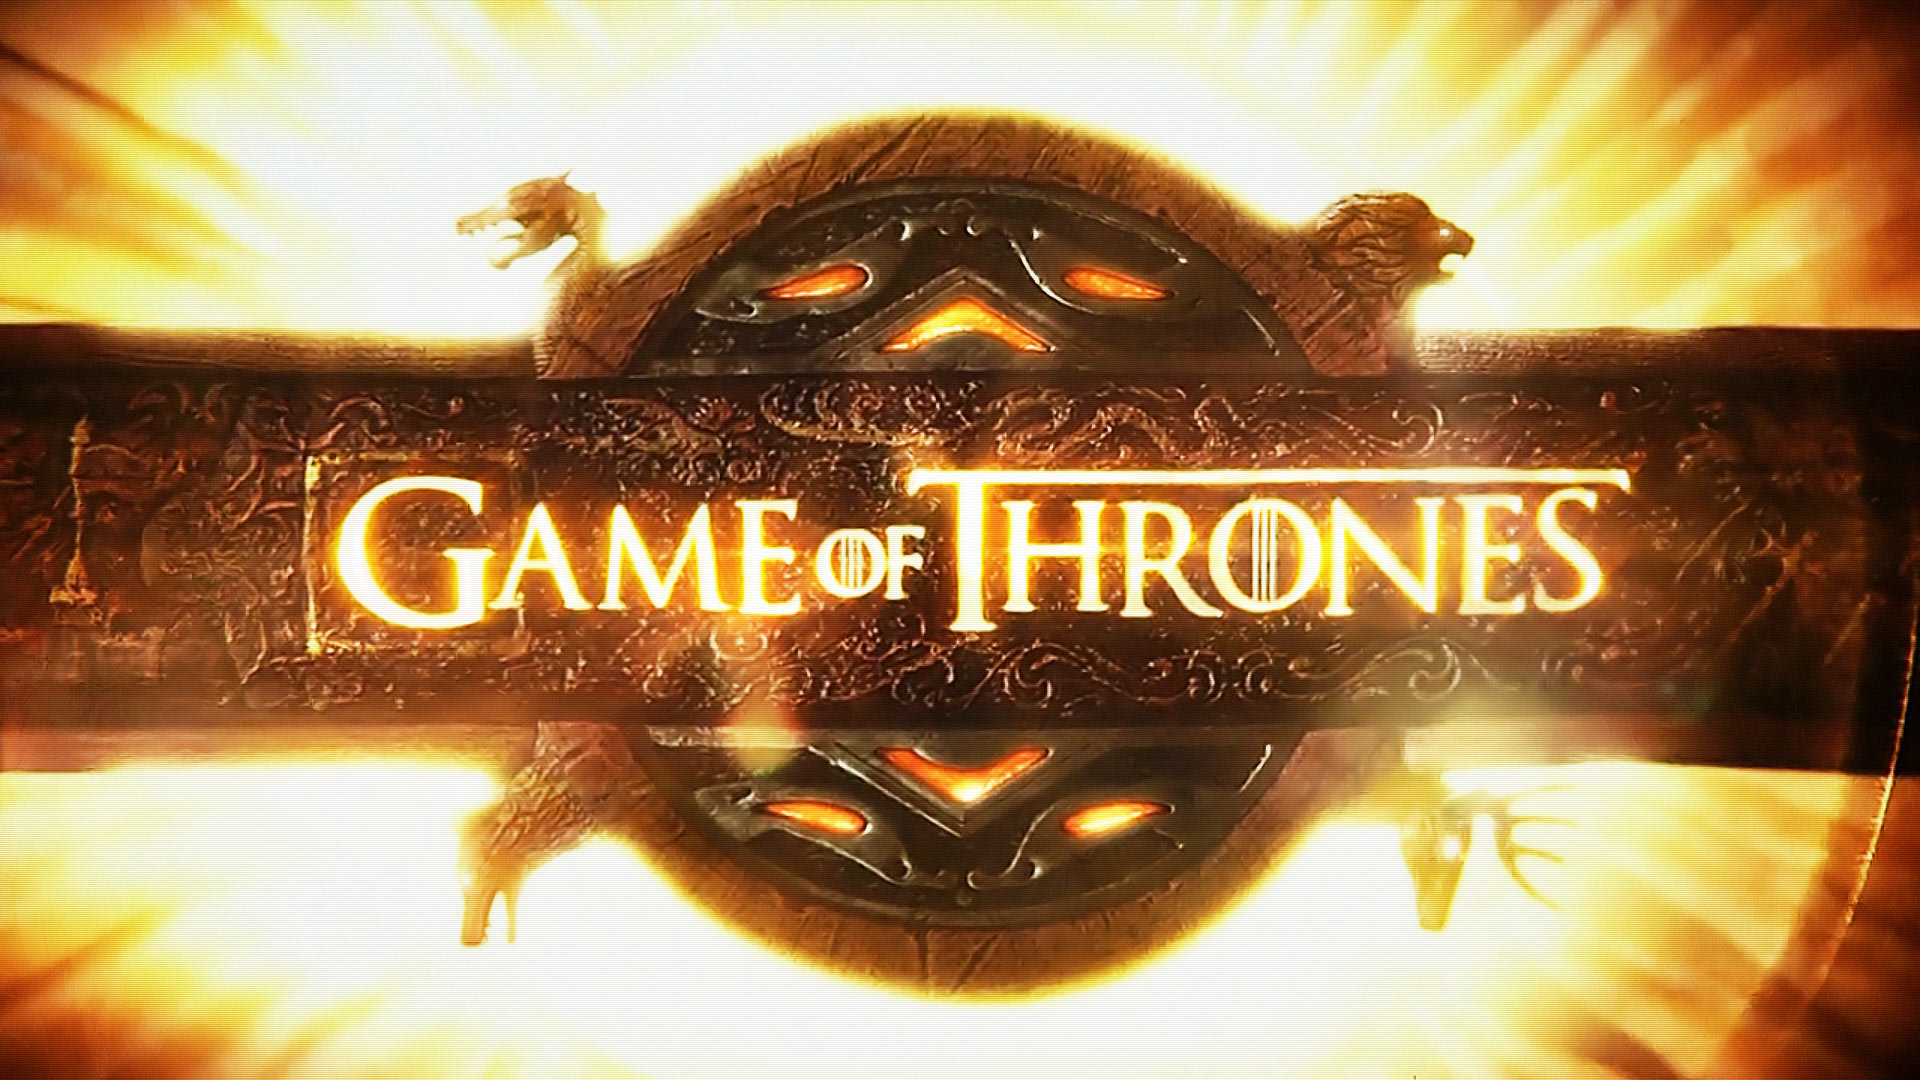 Game Of Thrones wallpaper 1920x1080 Full HD (1080p) desktop background